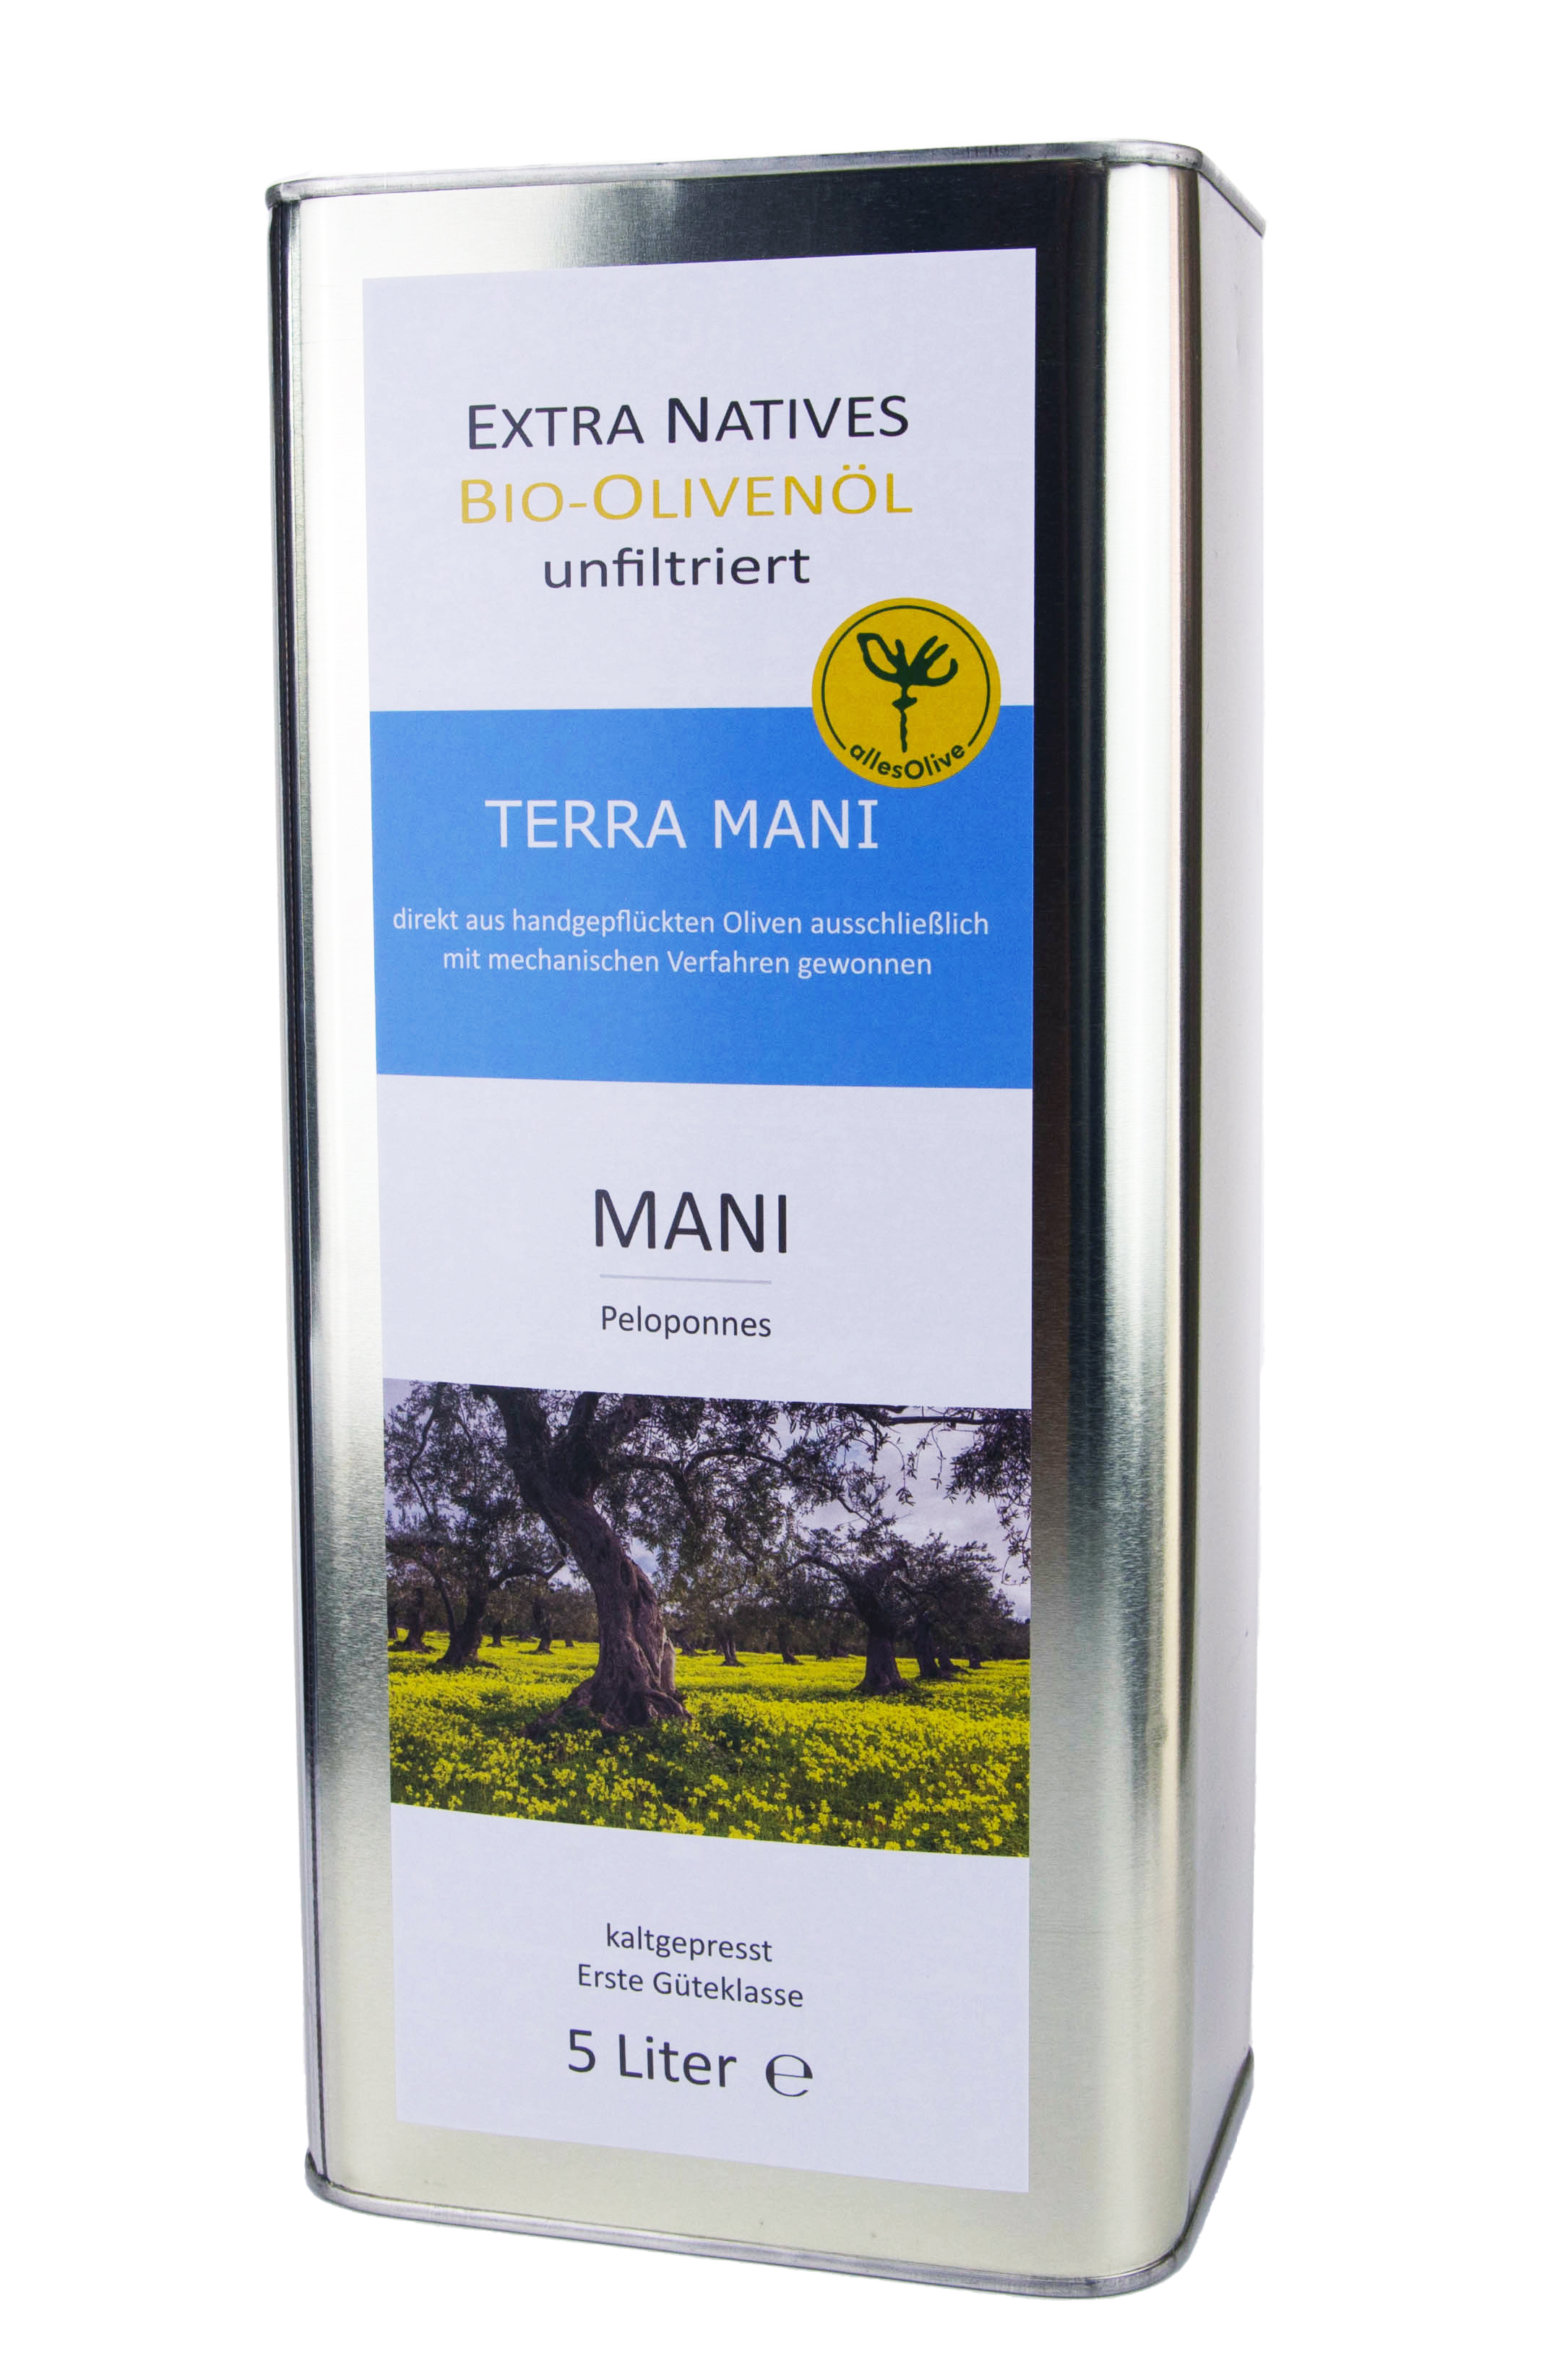 TERRA-MANI Natives Bio-Olivenöl Extra, unfiltriert, 5L - Kanister